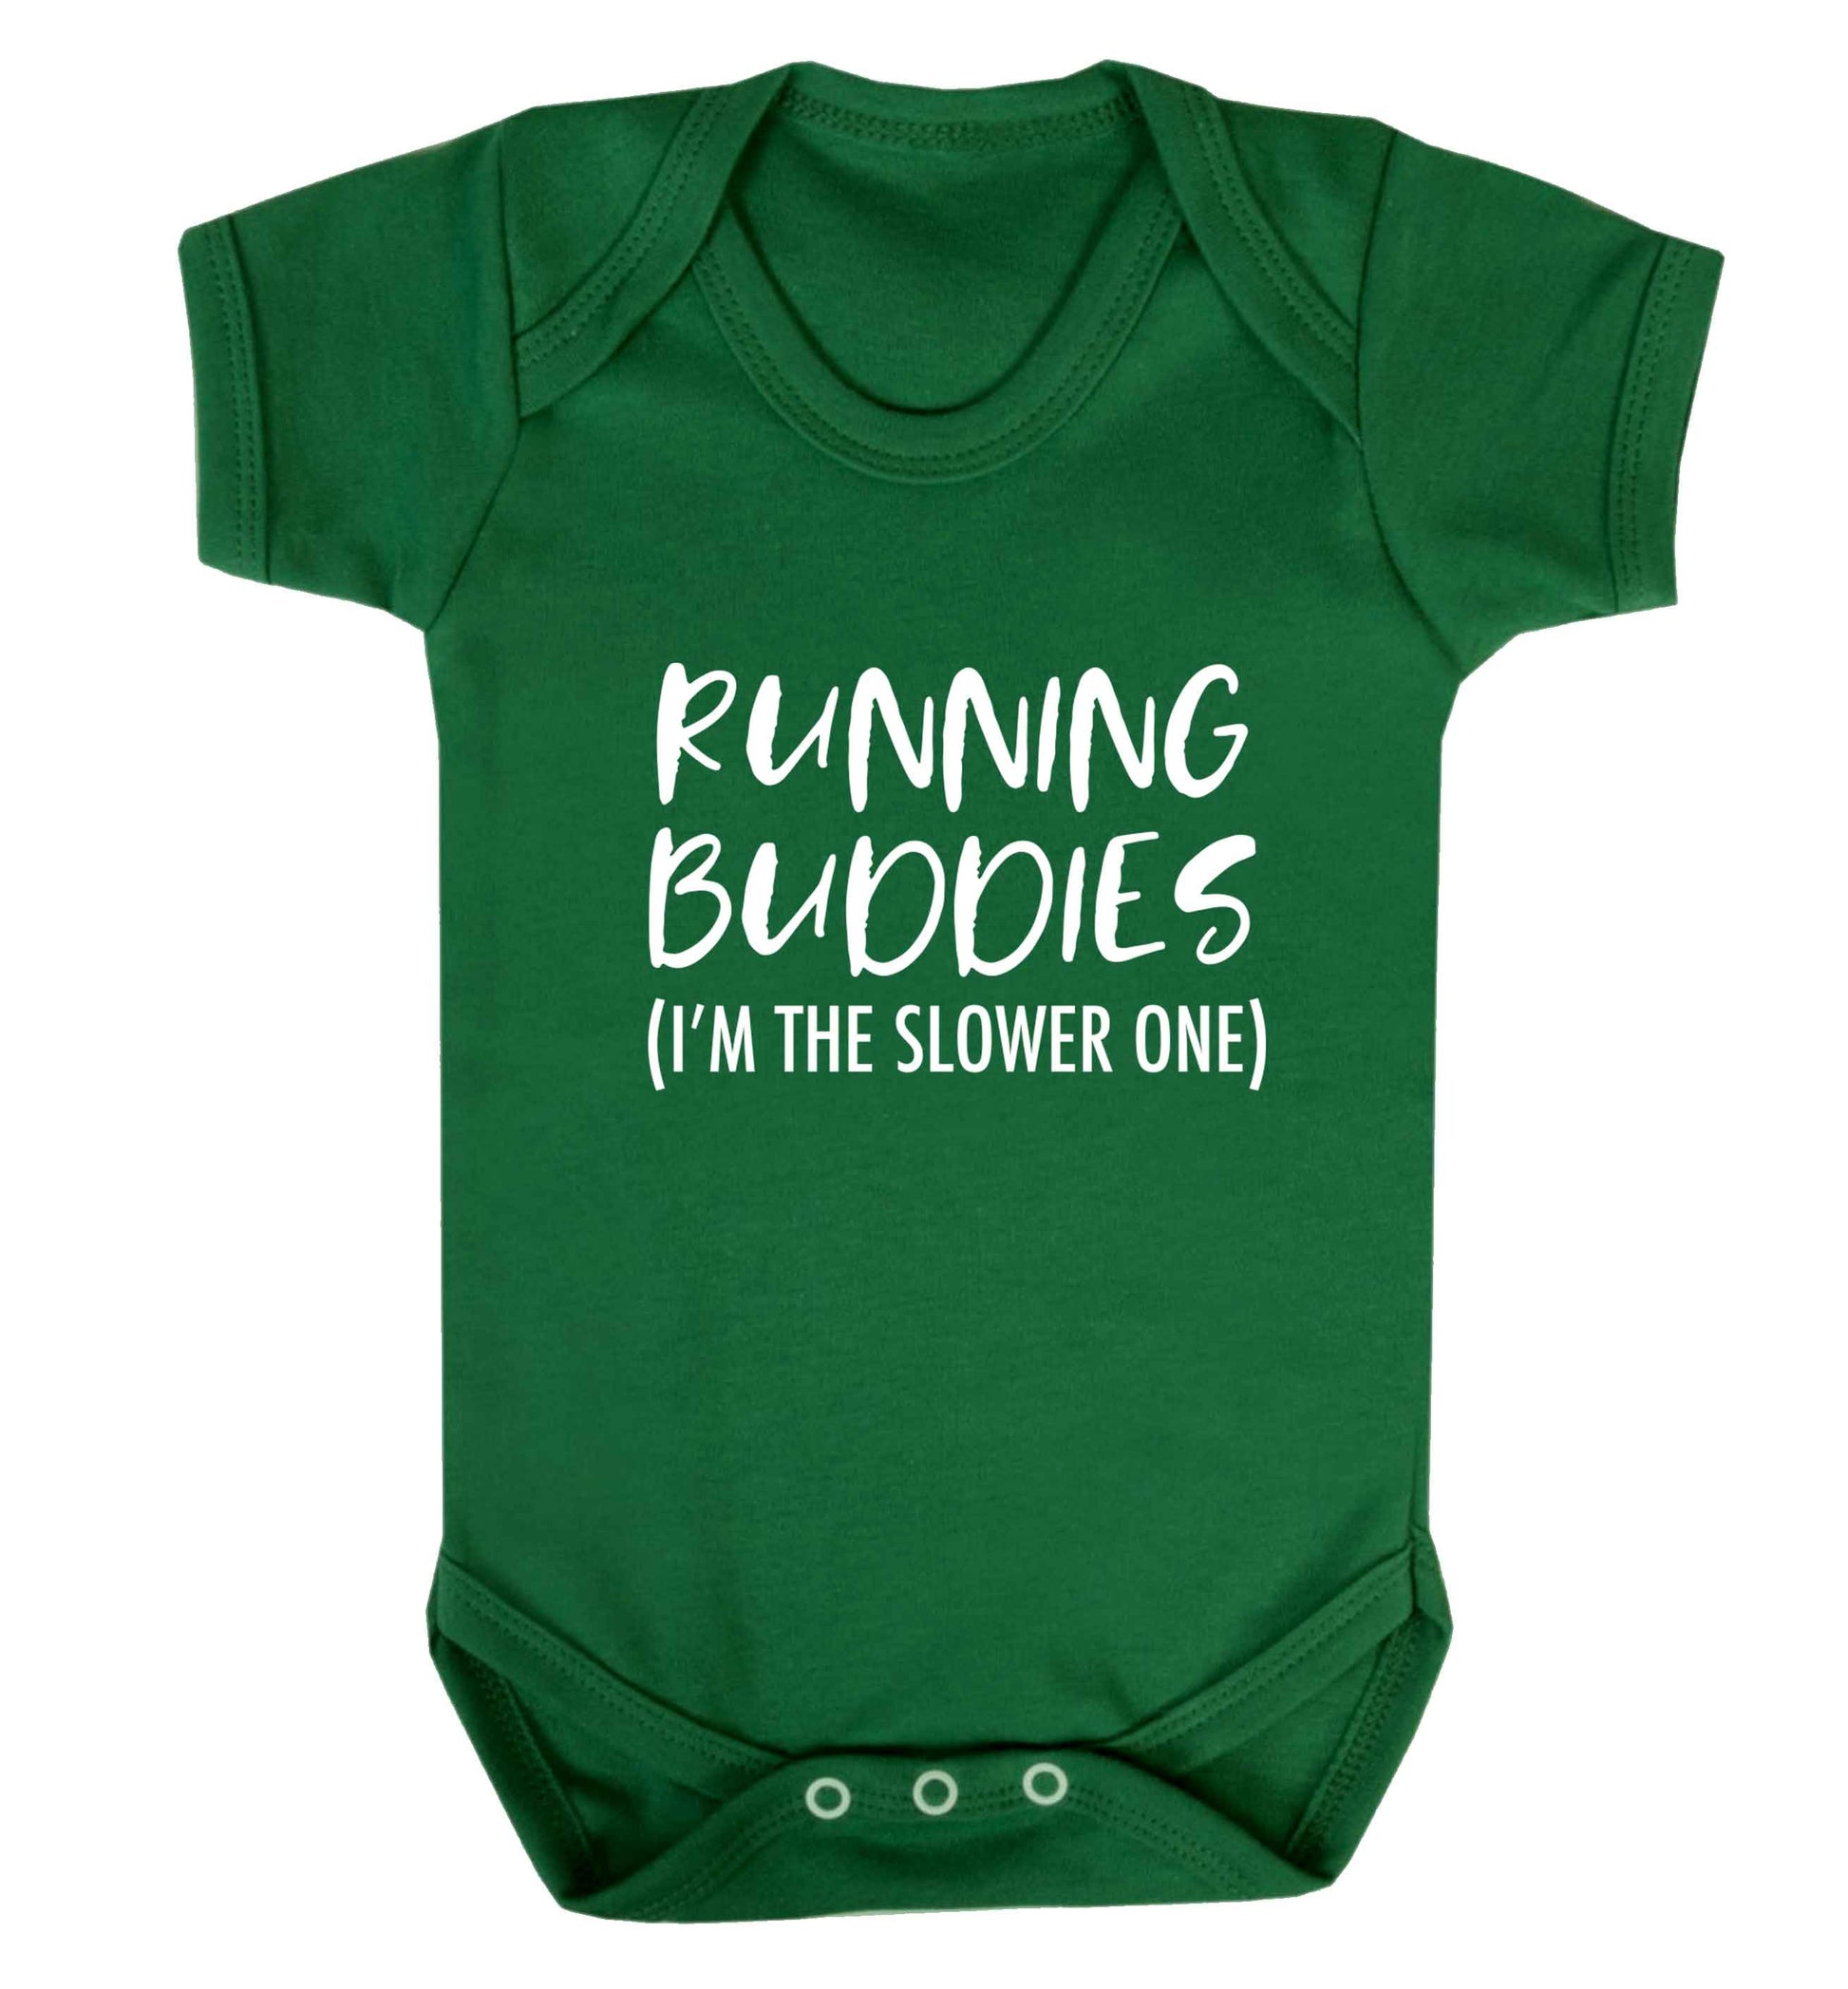 Running buddies (I'm the slower one) baby vest green 18-24 months